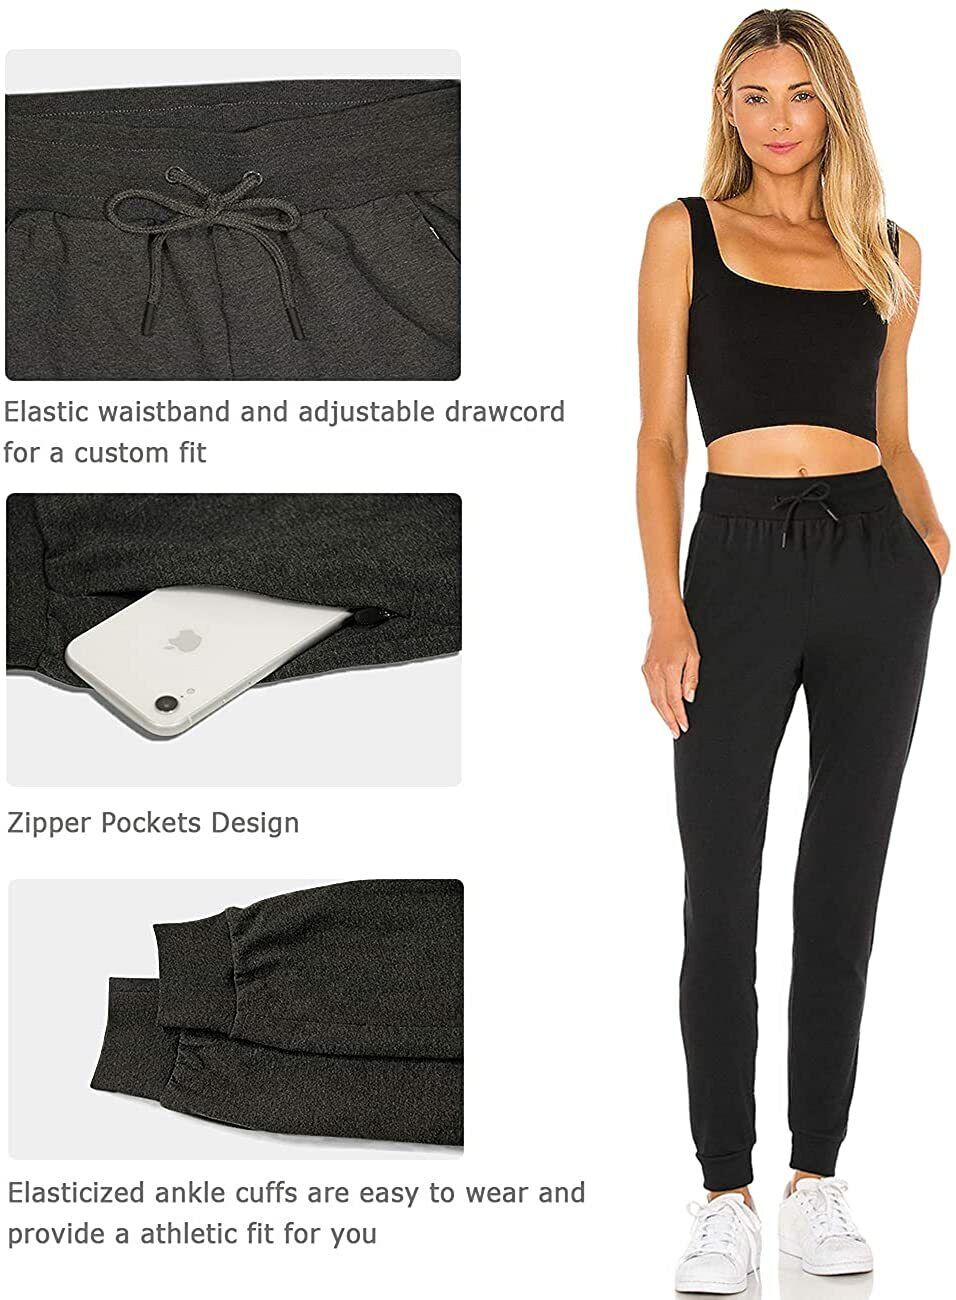 NEW Black Women's Sweatpants with Zipper Pockets Casual Sport Joggers Pants XL